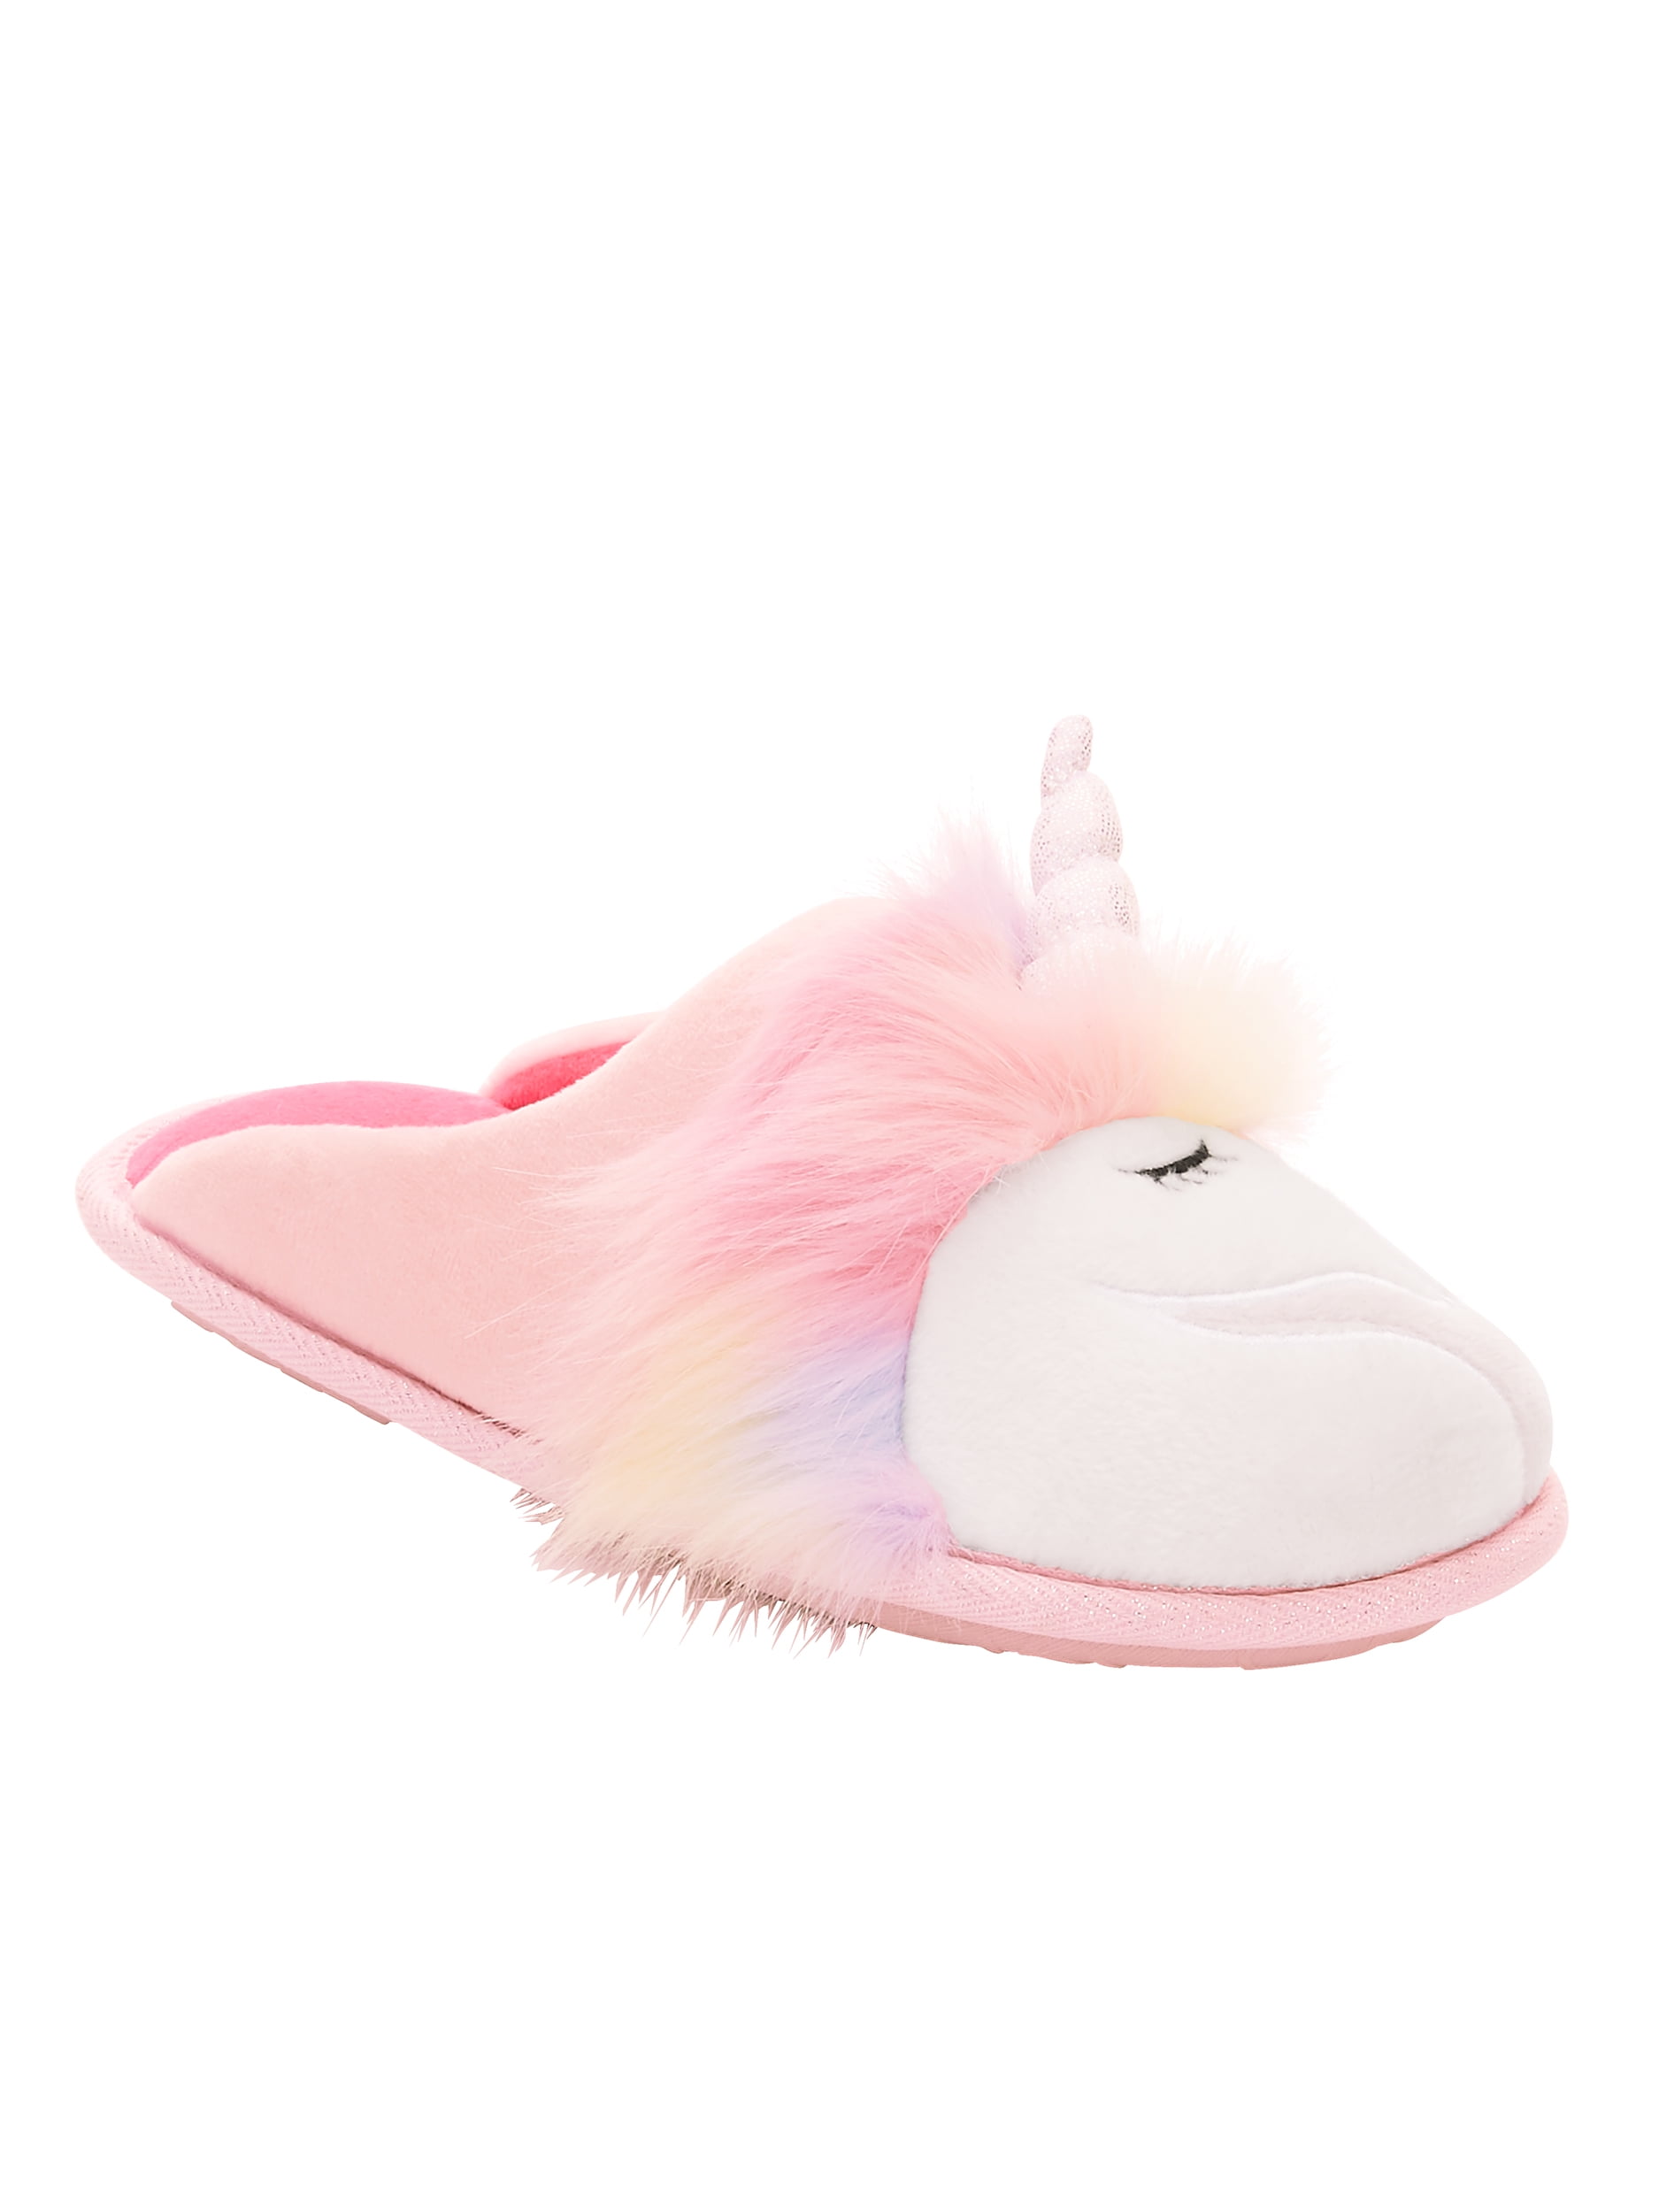 unicorn slippers at walmart